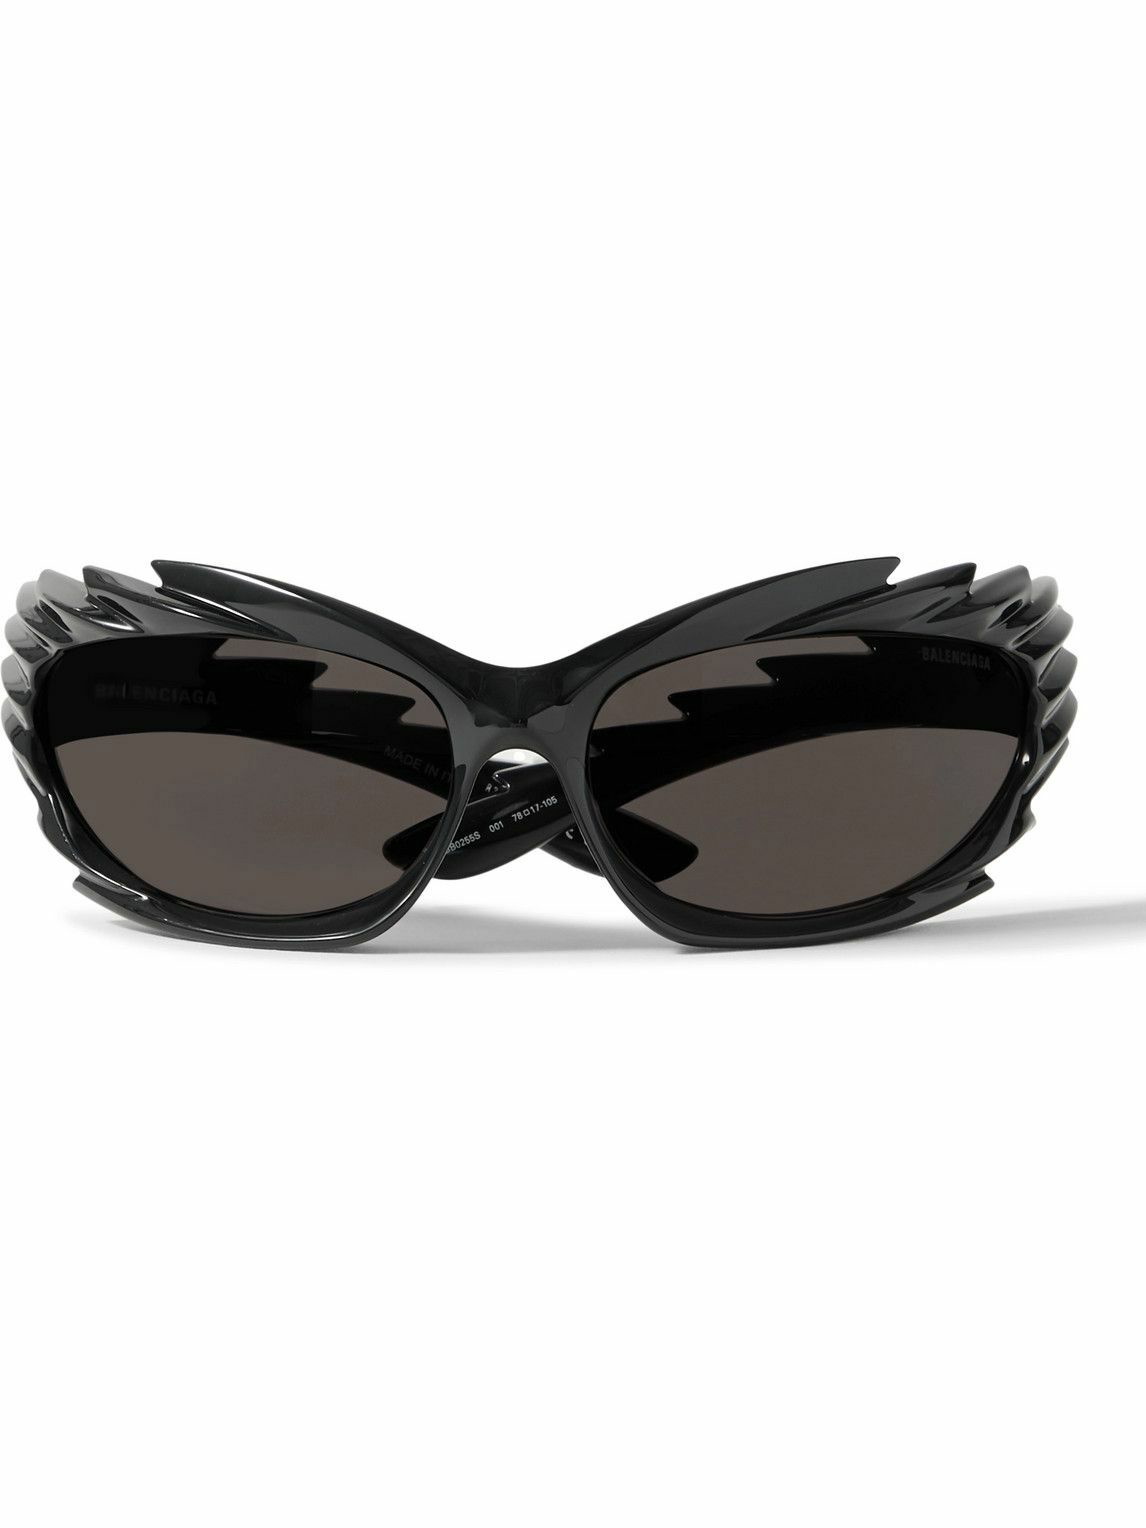 Balenciaga - Spike Acetate Sunglasses Balenciaga